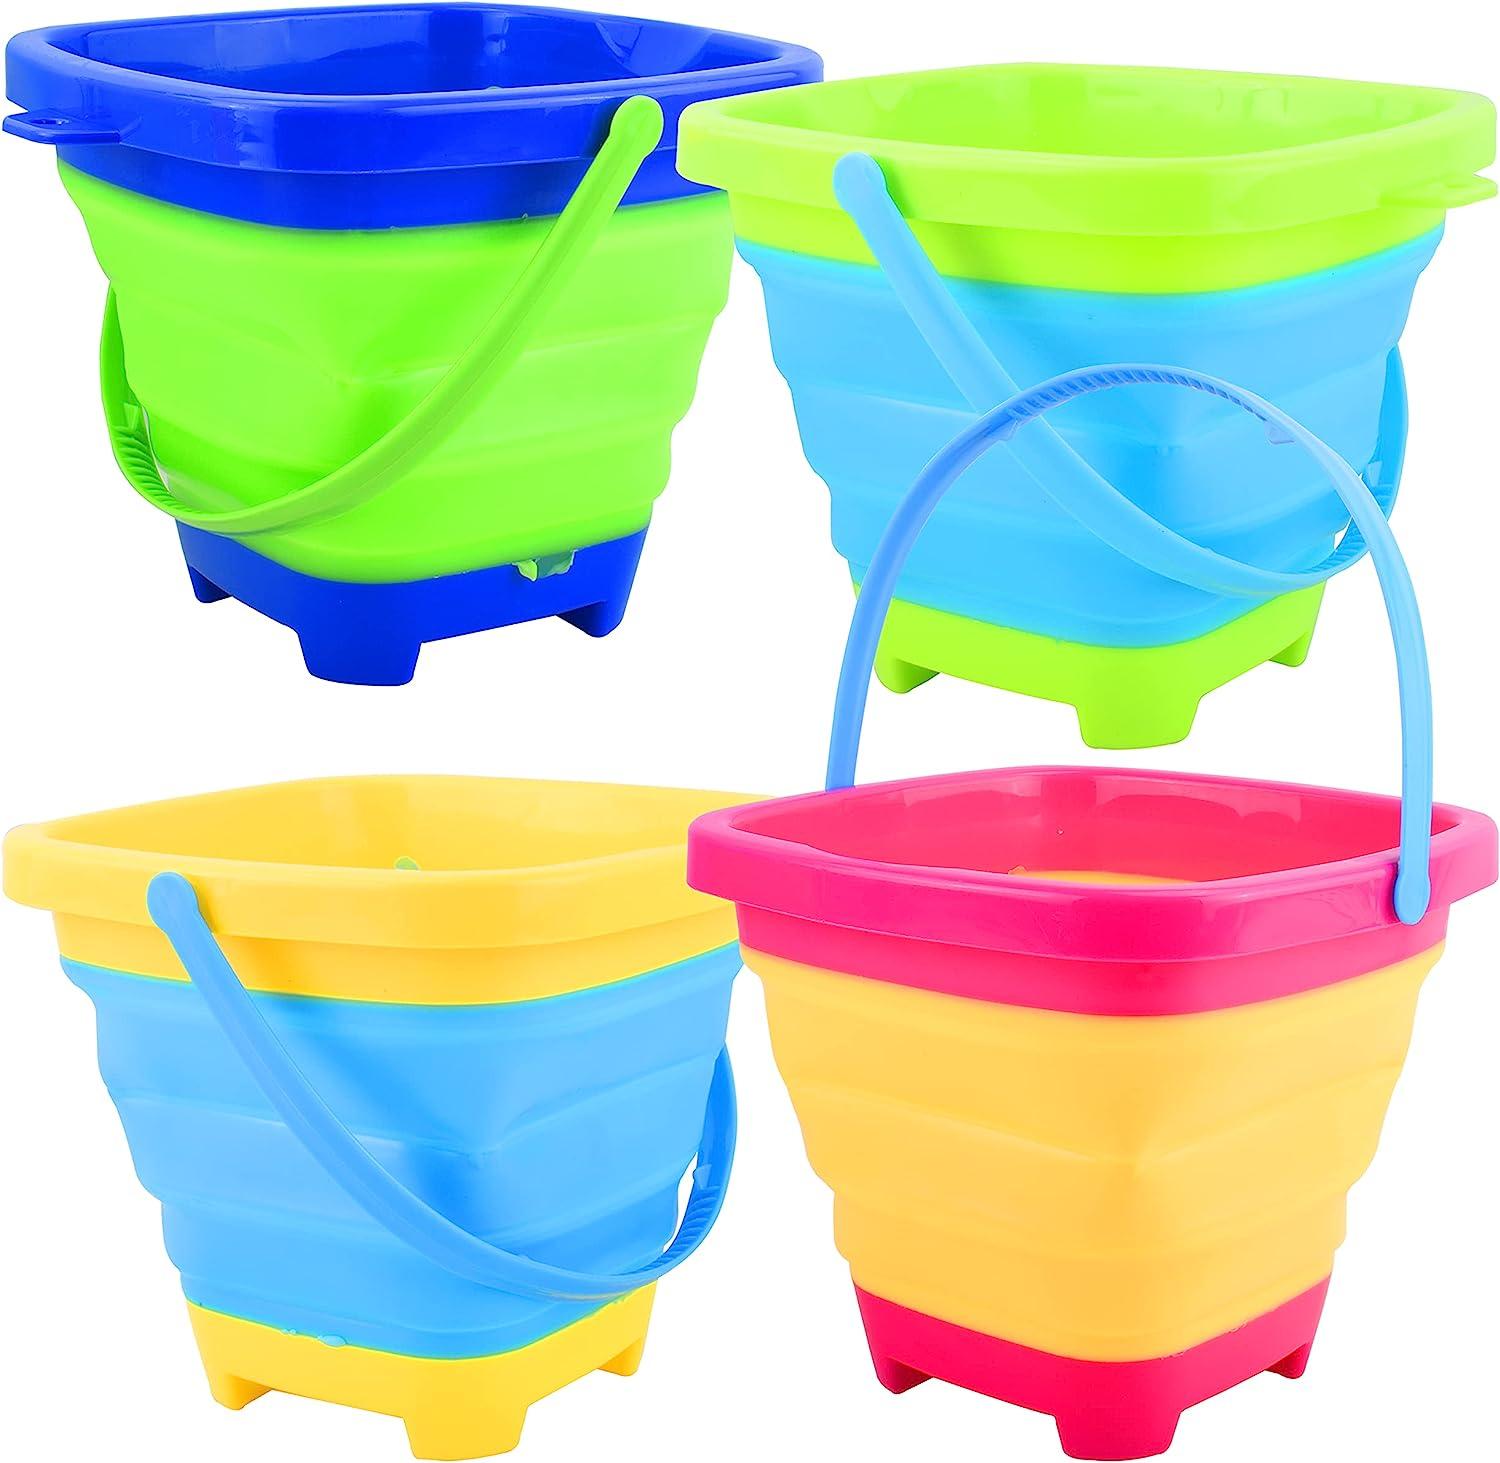 JOYIN 4 Collapsible Basket Buckets, 2L Square Foldable Pail